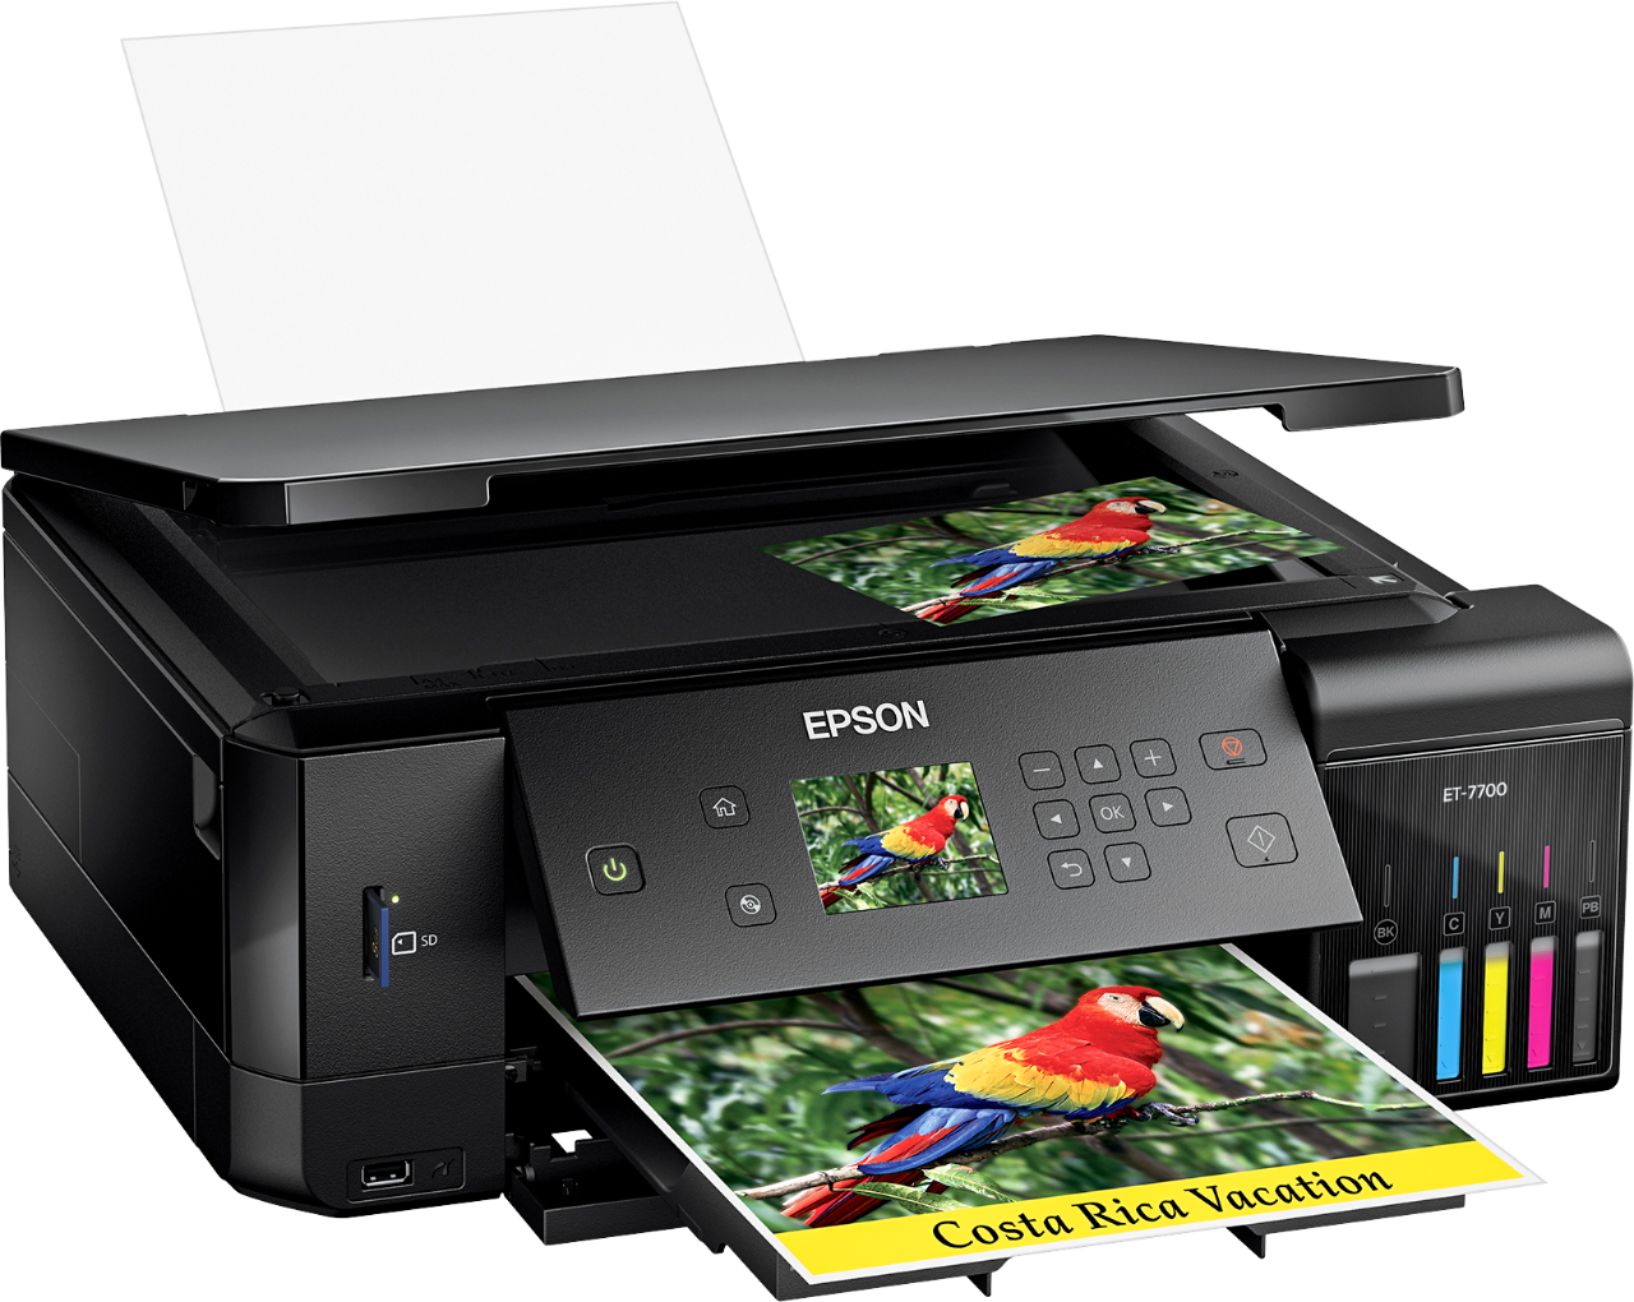 Angle View: Epson - Expression Premium EcoTank ET-7700 Wireless All-in-One Inkjet Printer - Black